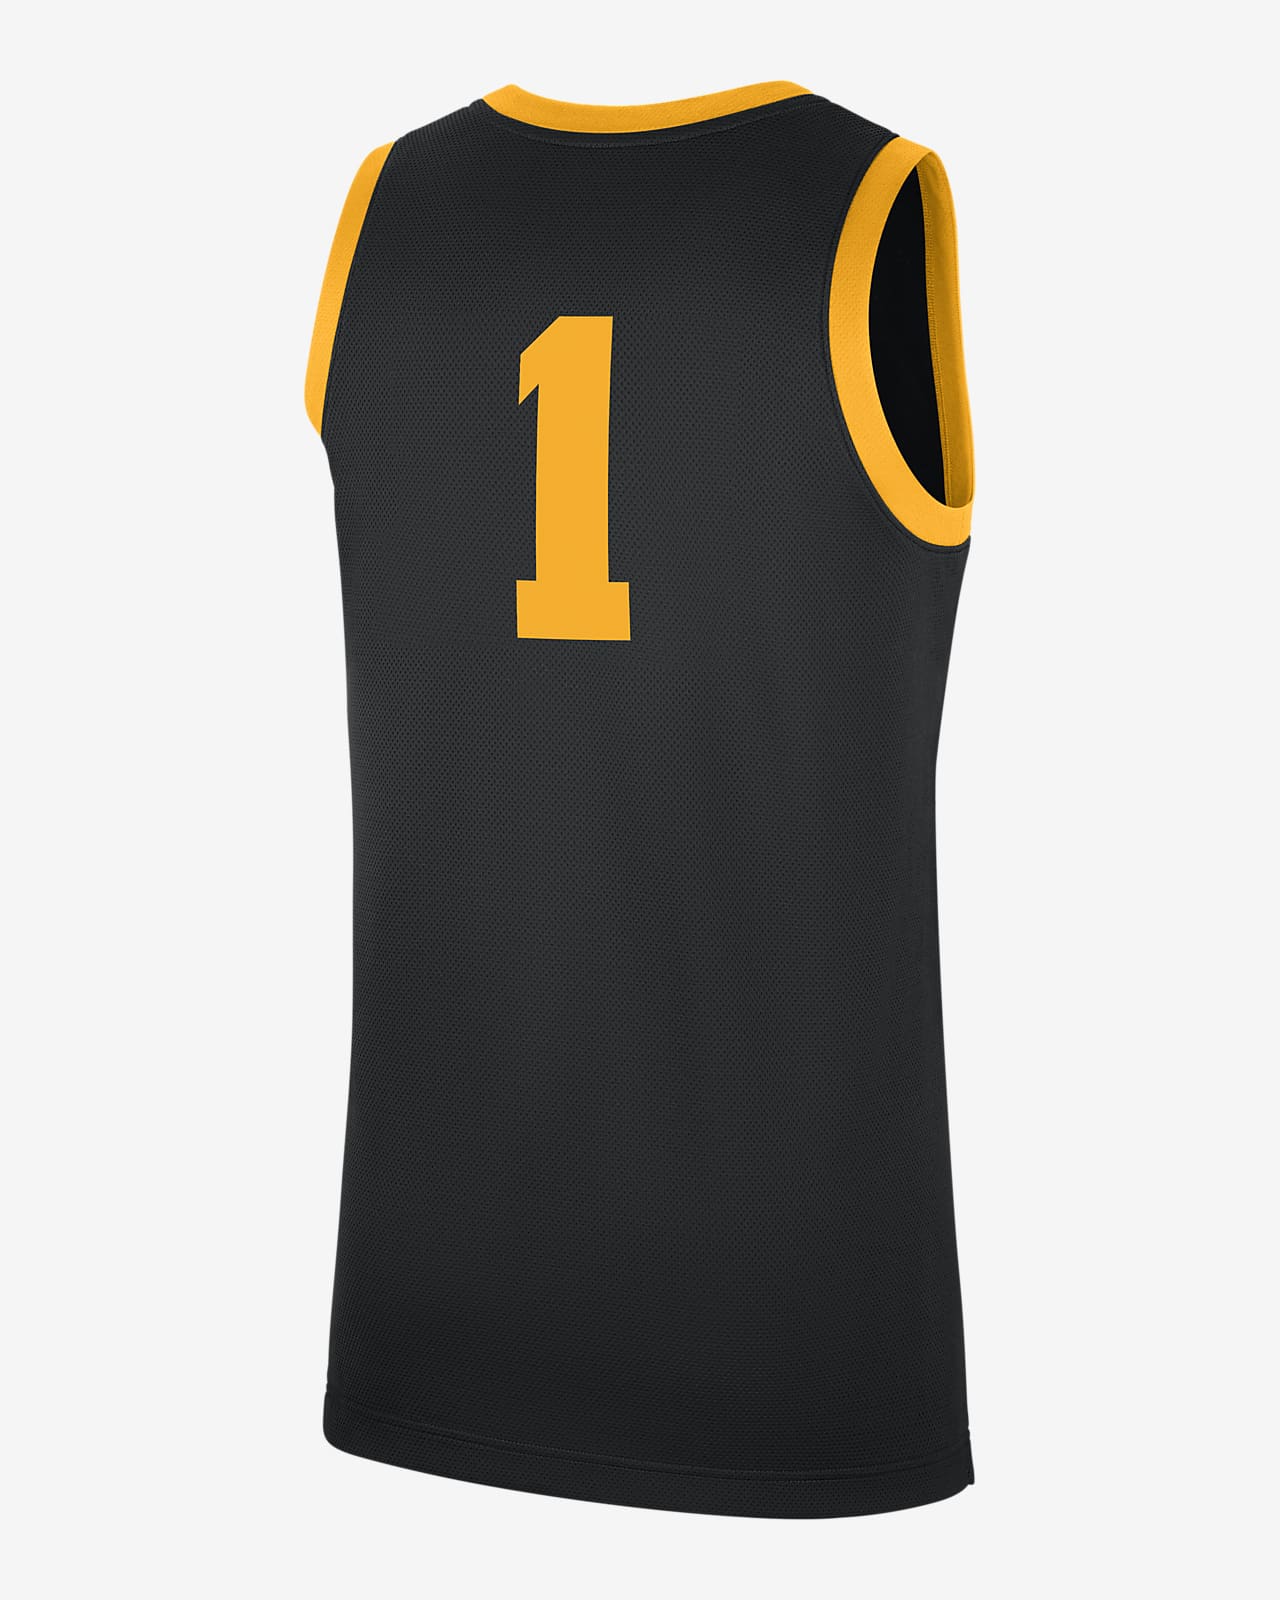 black and yellow jersey basketball